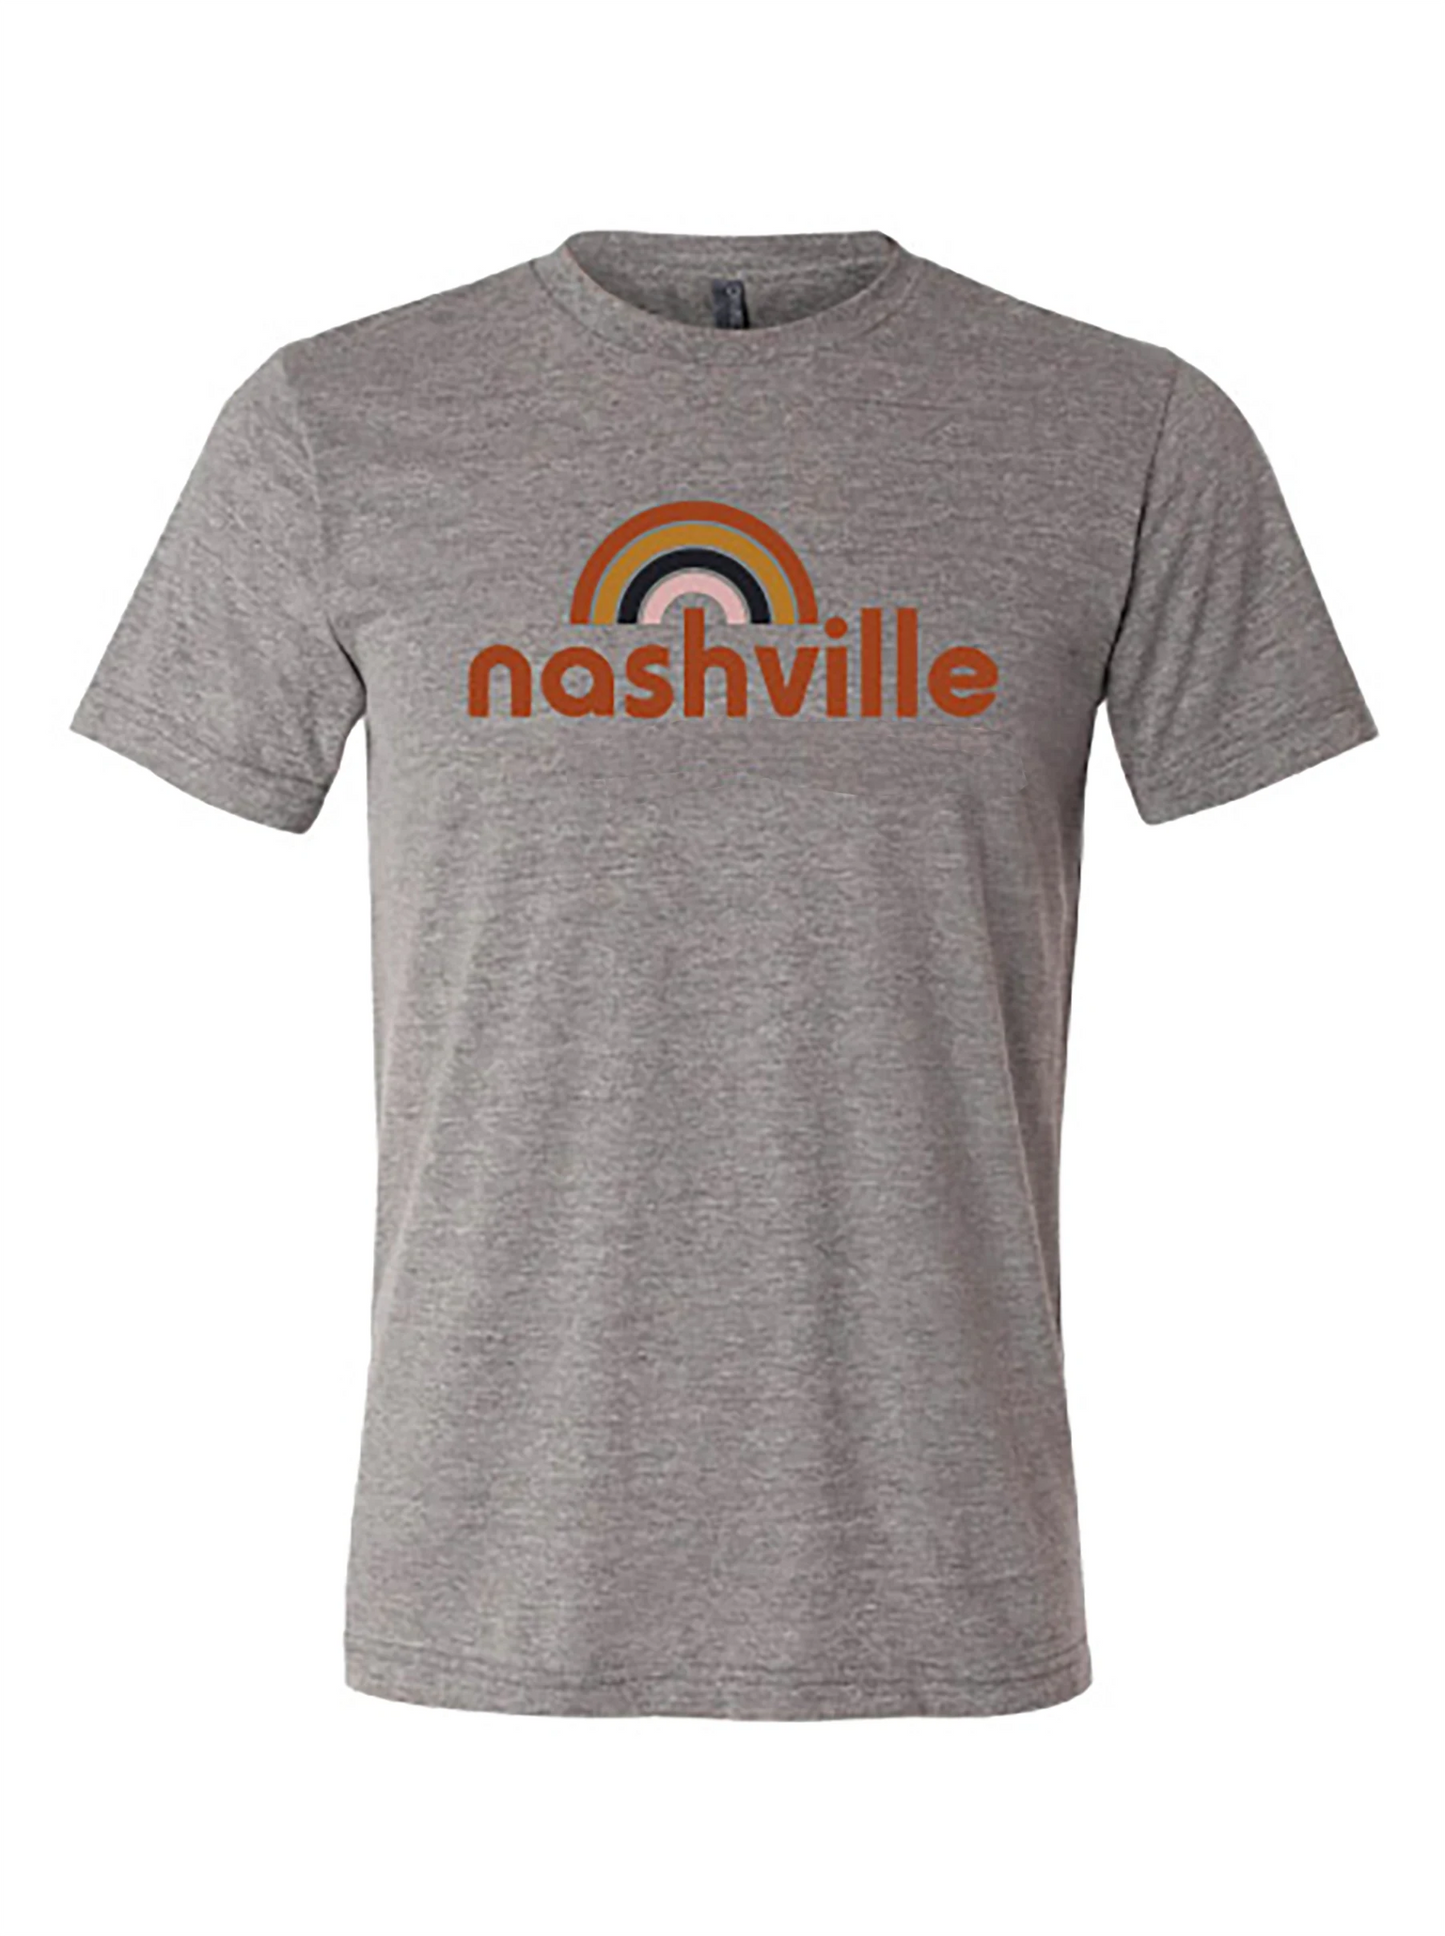 Nashville Rainbow Gray Shirt